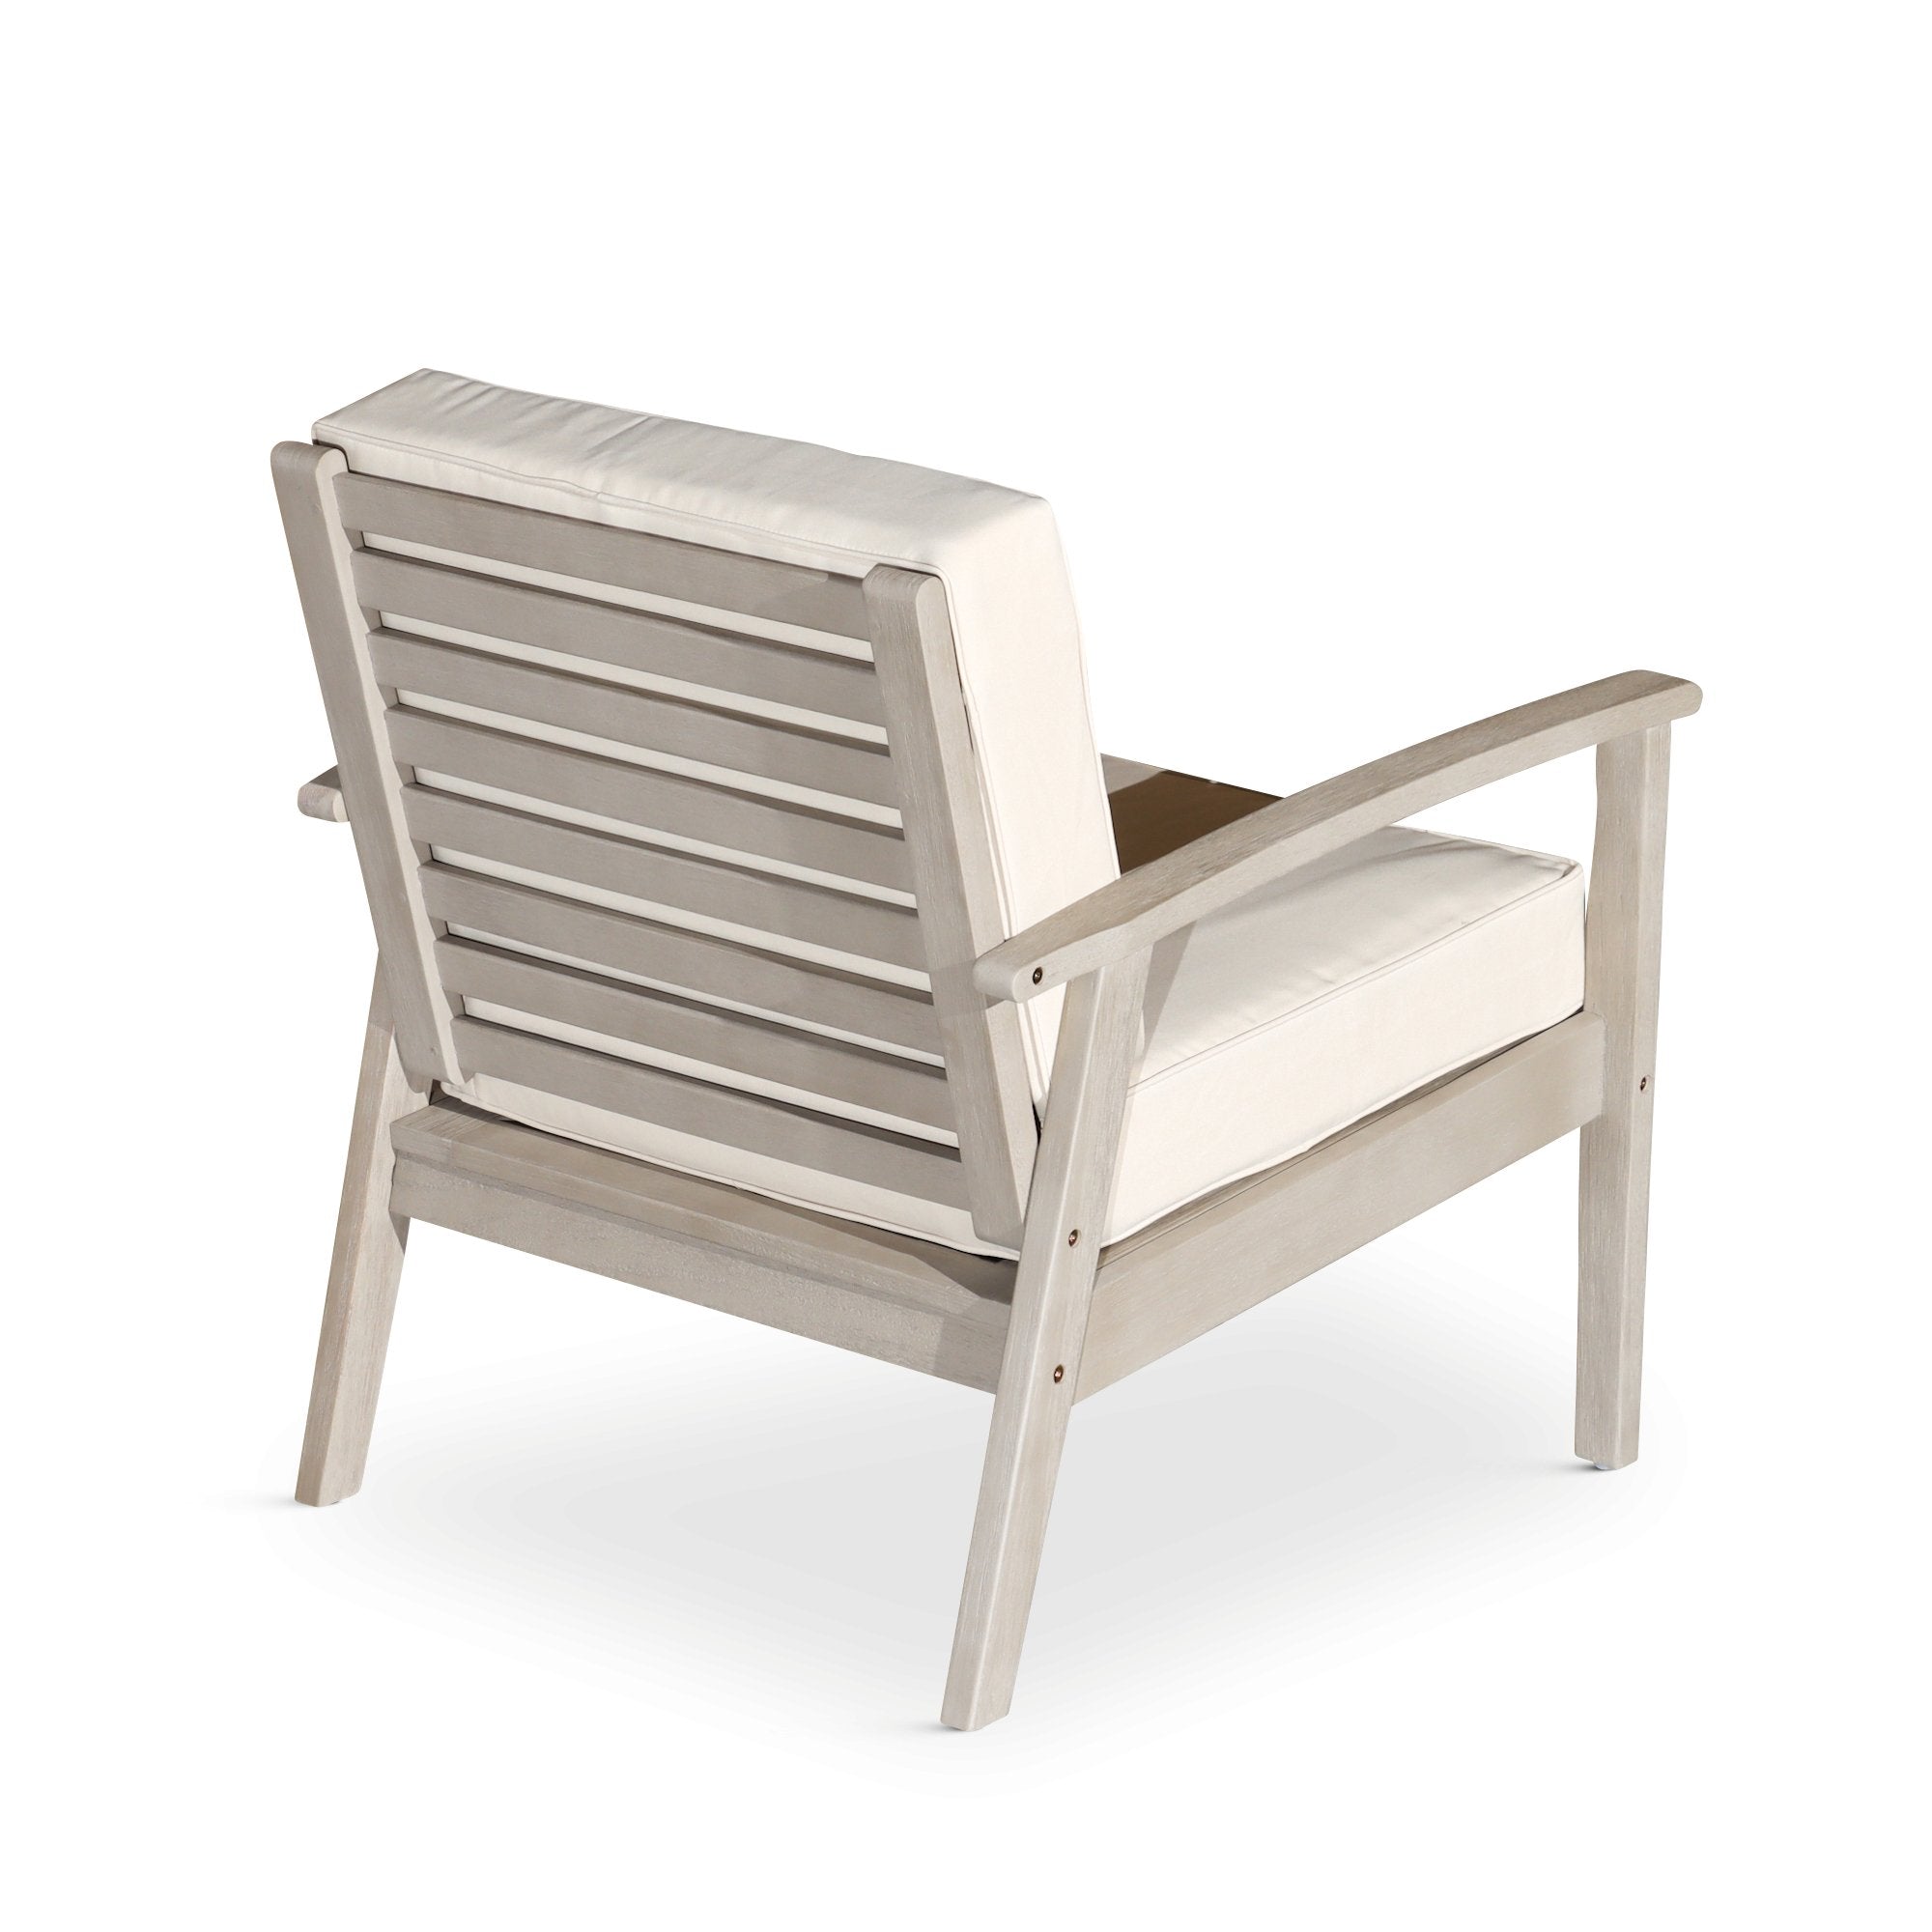 Outdoor Deep Seat Chair, Driftwood Gray Finish, Sand Cushions - Tuesday Morning-Chair & Sofa Cushions